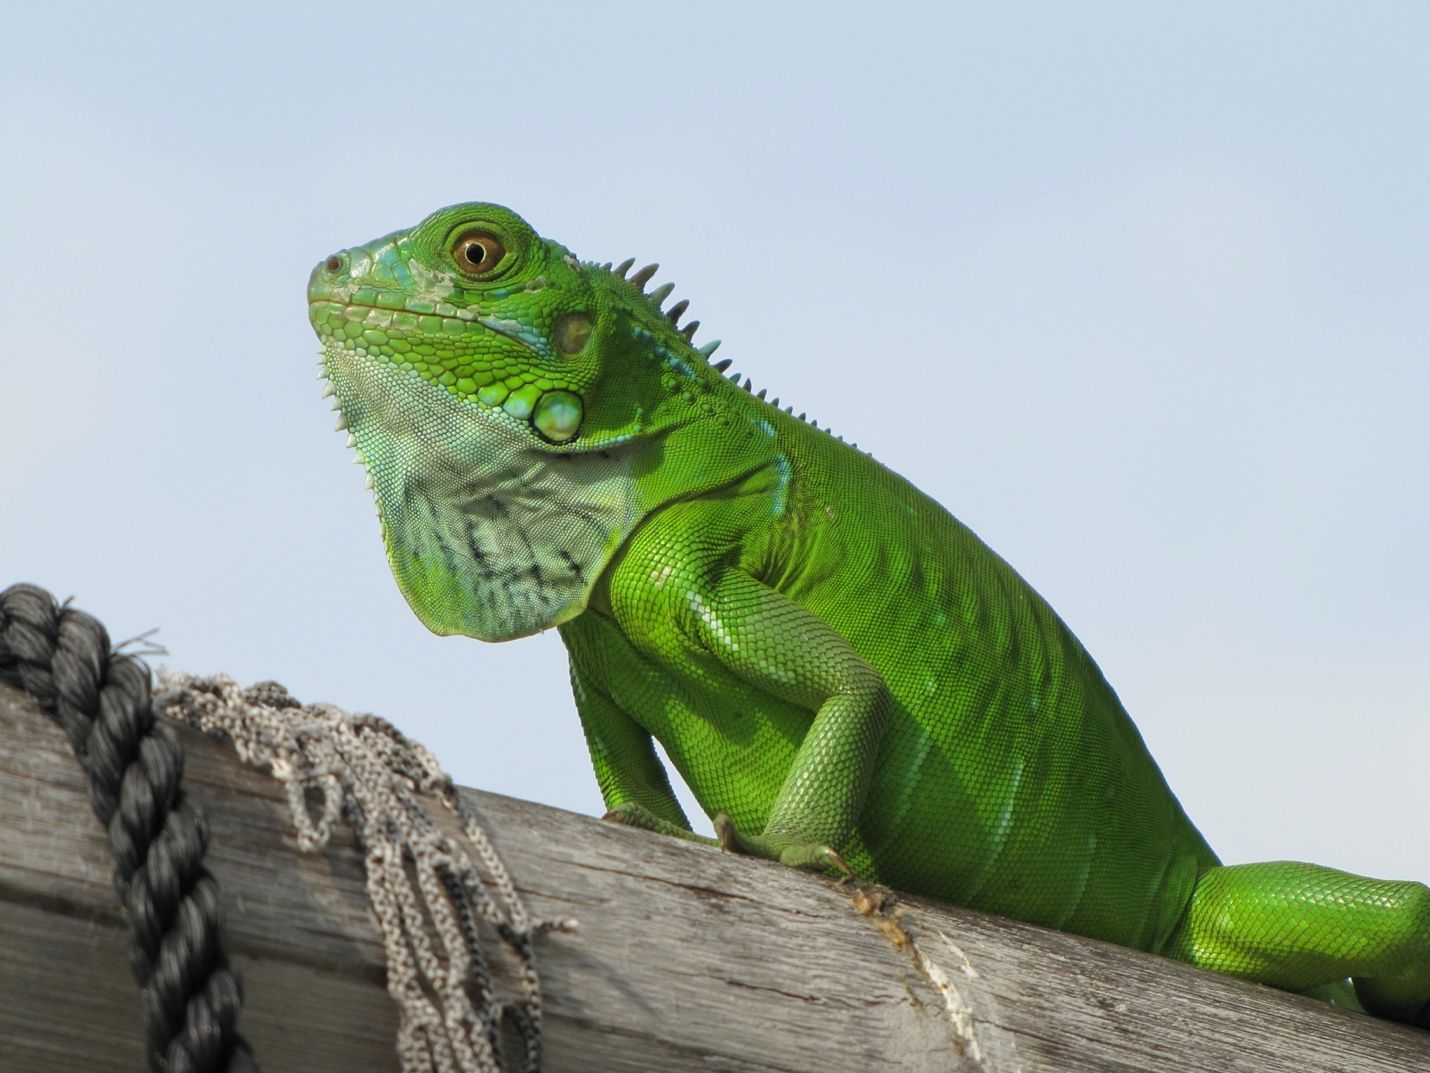 Las iguanas verdes (Iguana iguana) juveniles son de [un] color verde intenso, como este individuo de Key Largo, Florida.